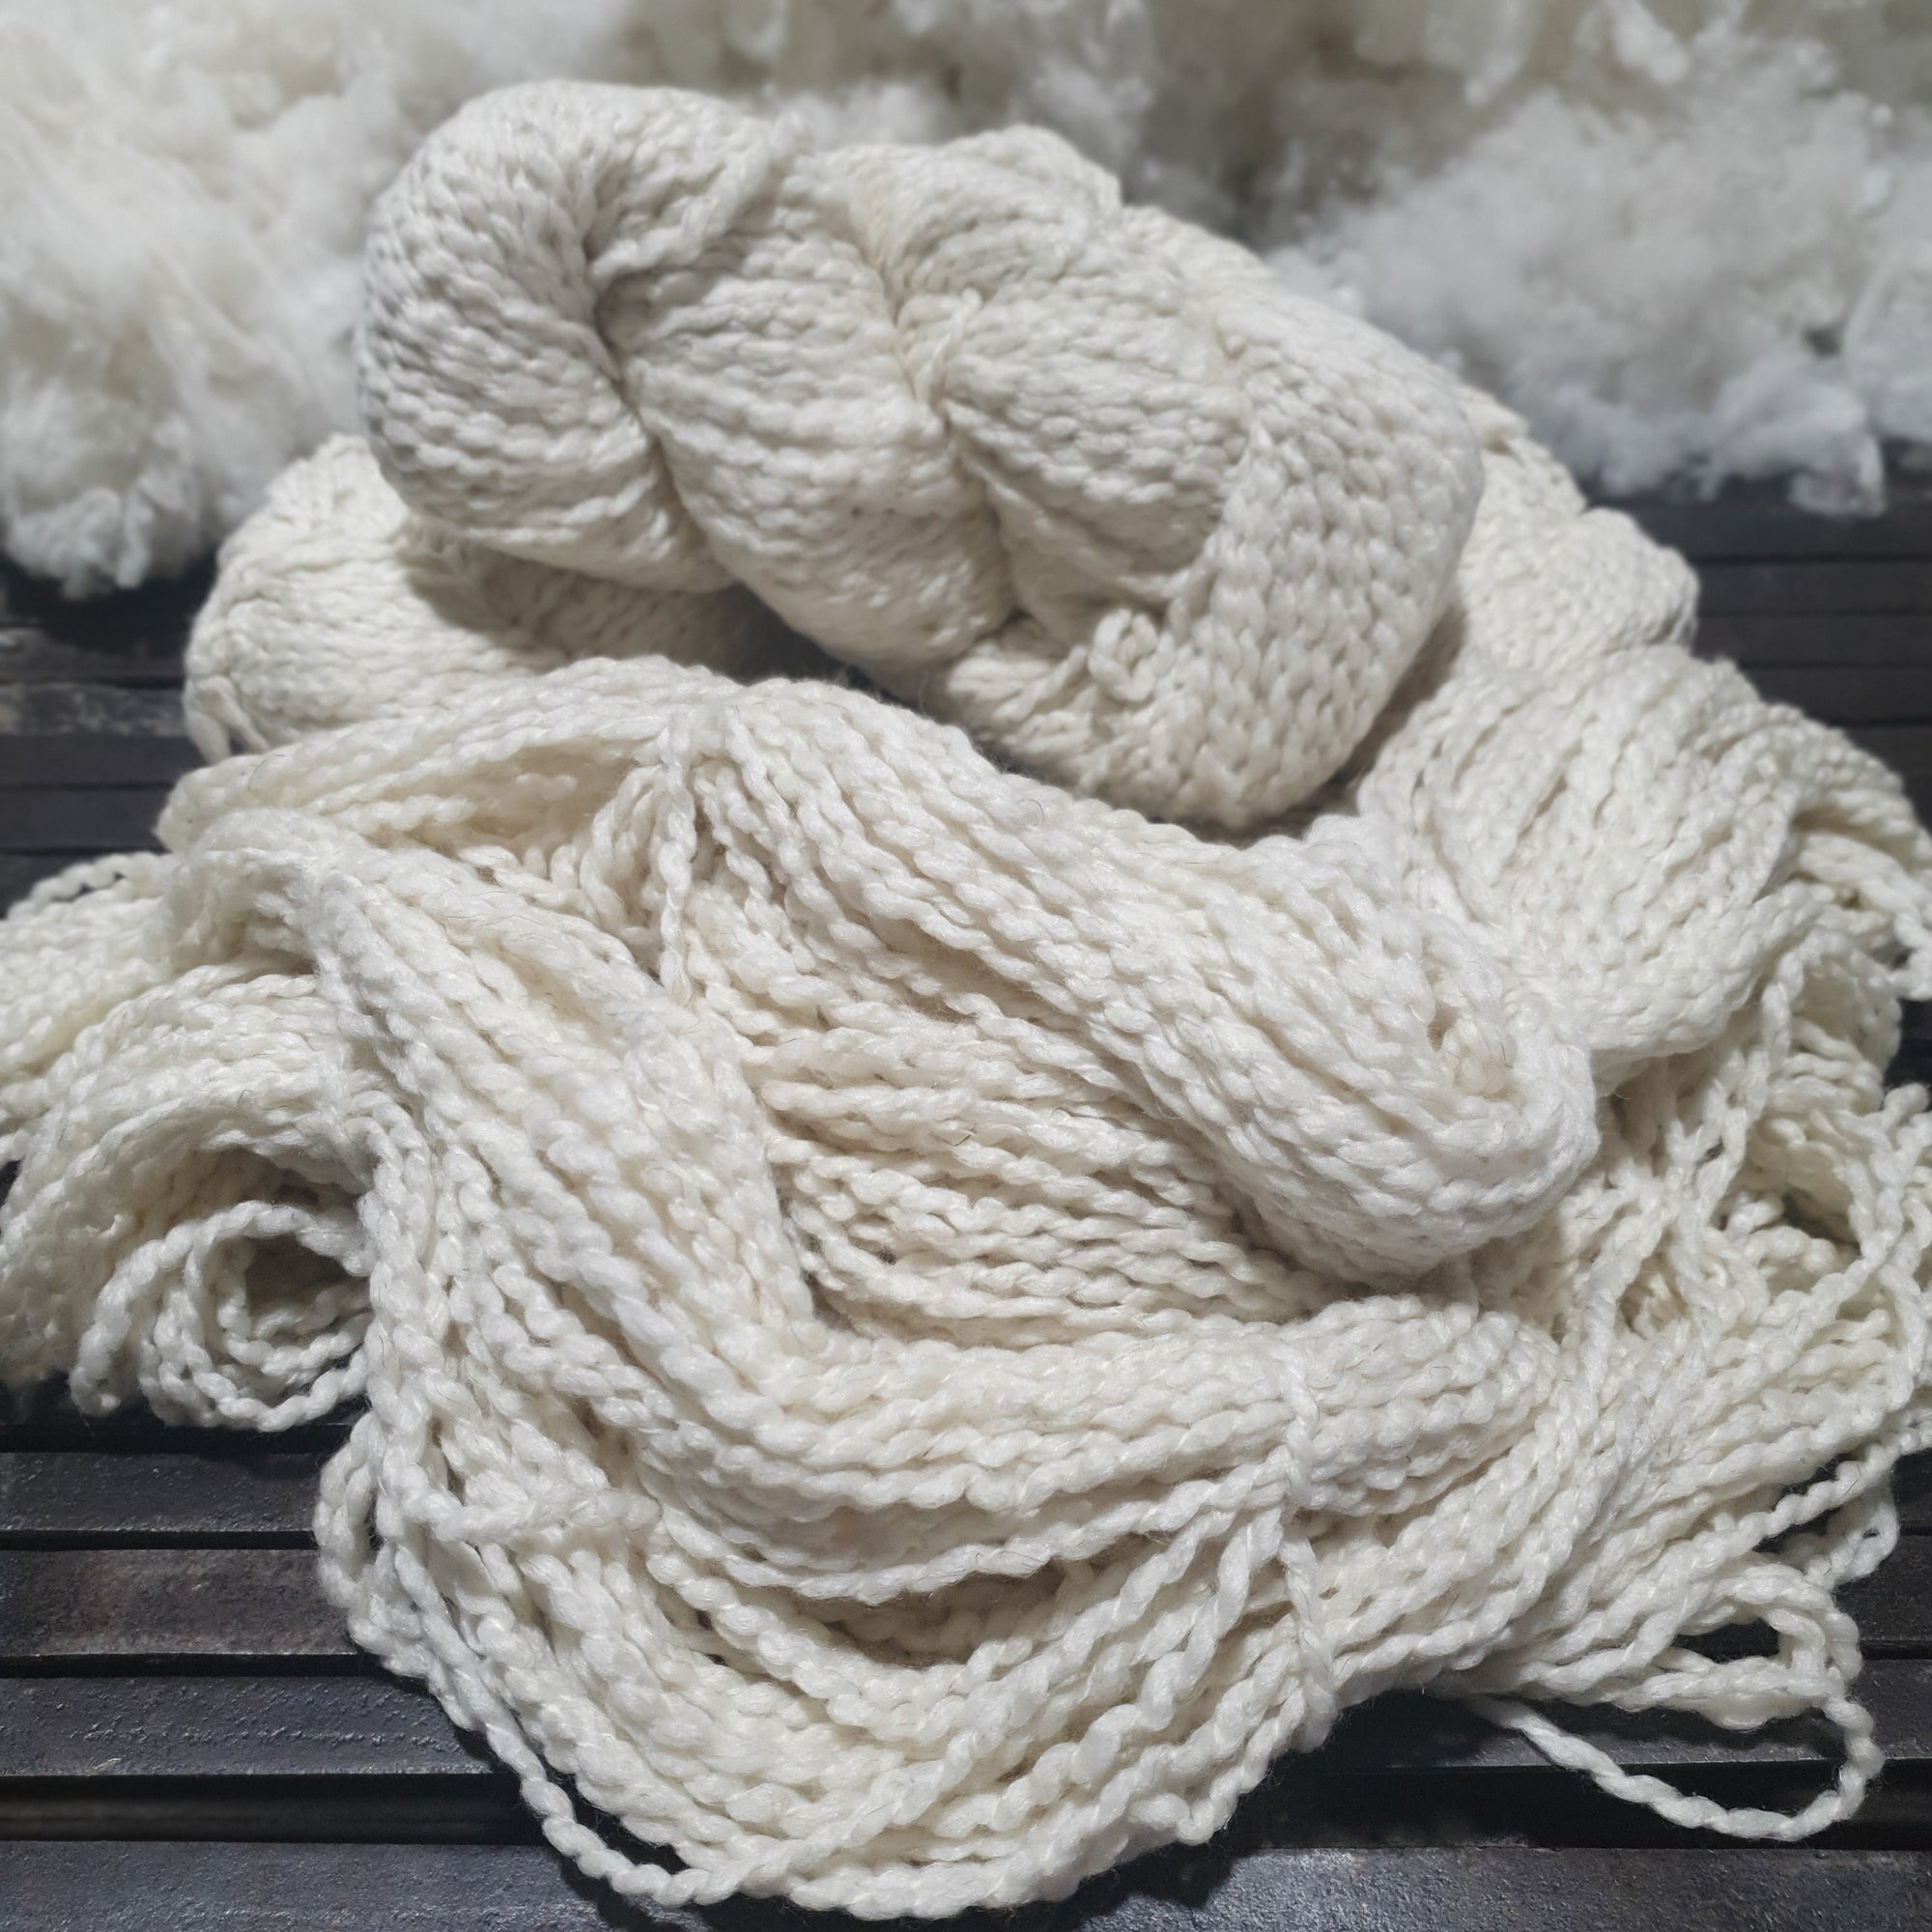 Undyed Merino Silk Luxury 4 ply Yarn